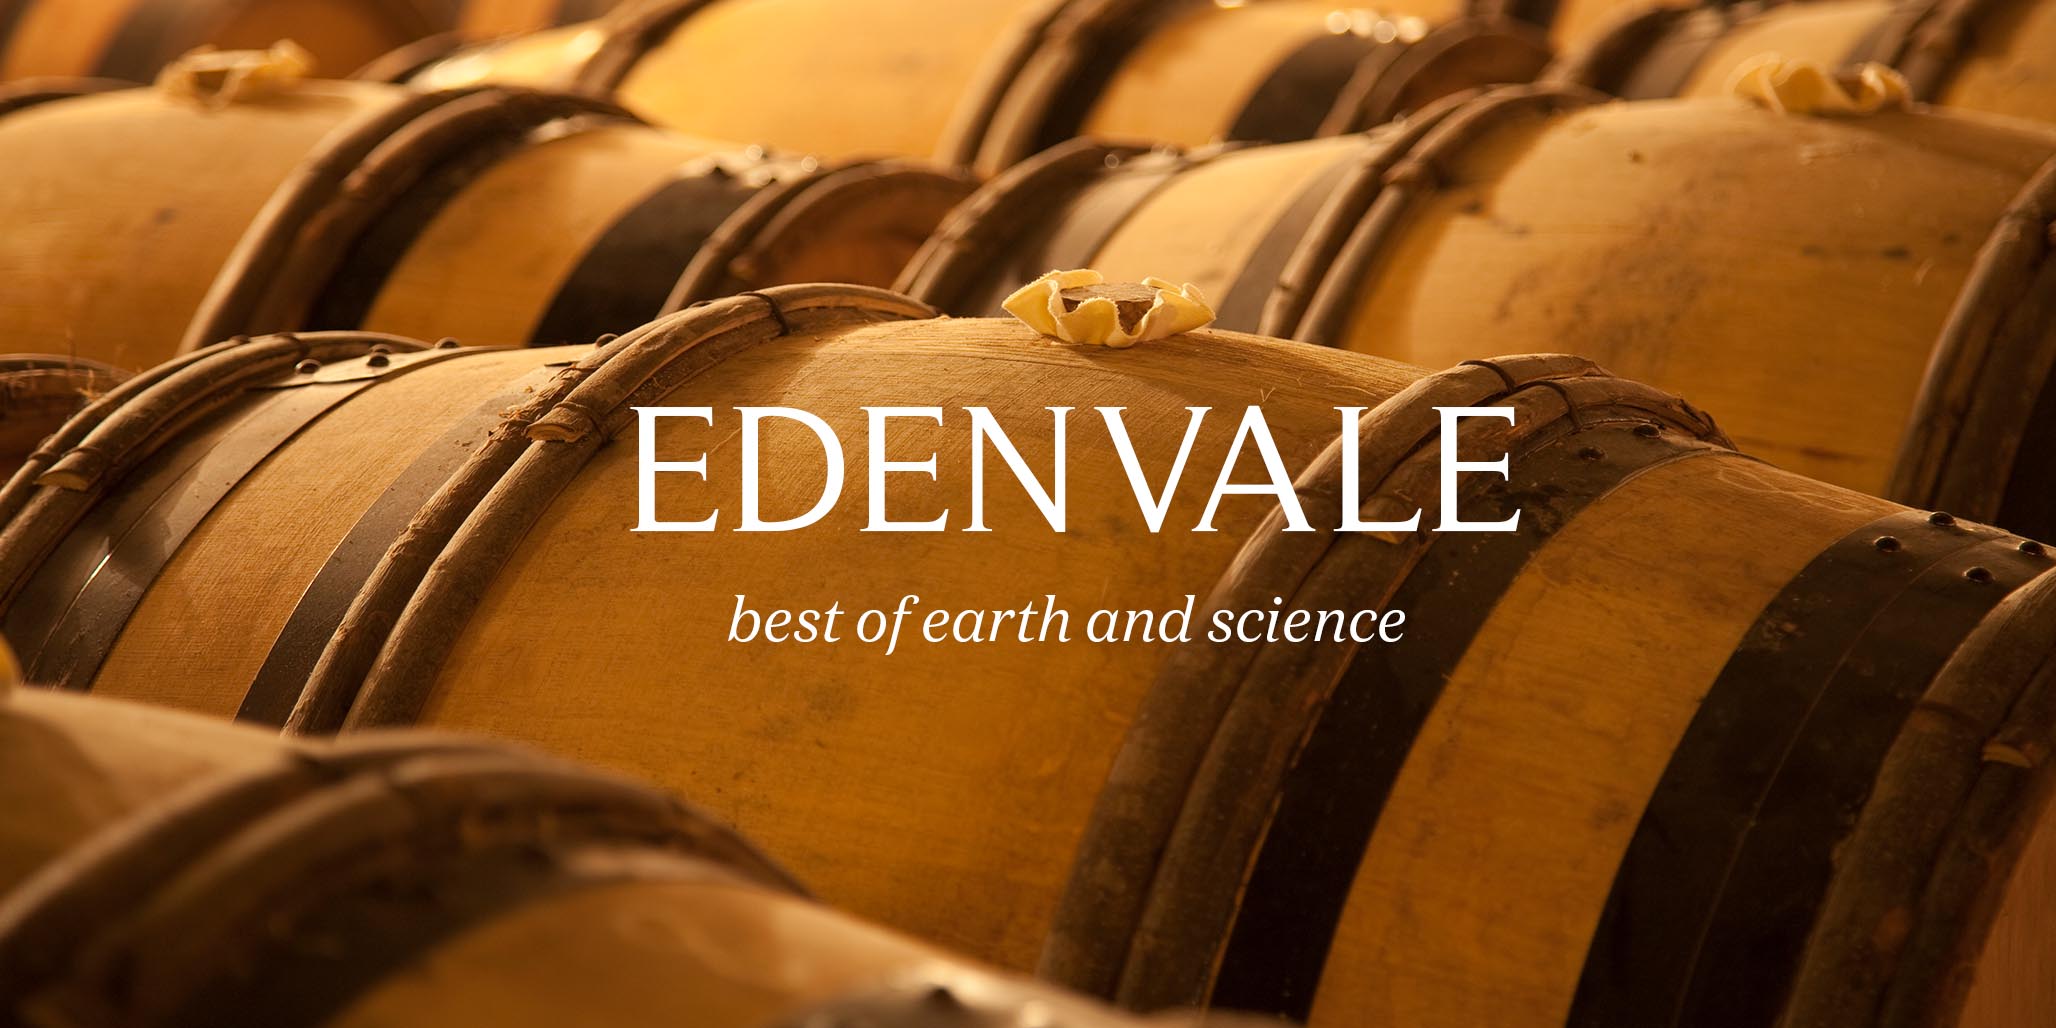 Australian wine label designers, Percept, create branding and packaging design for Edenvale, project image B